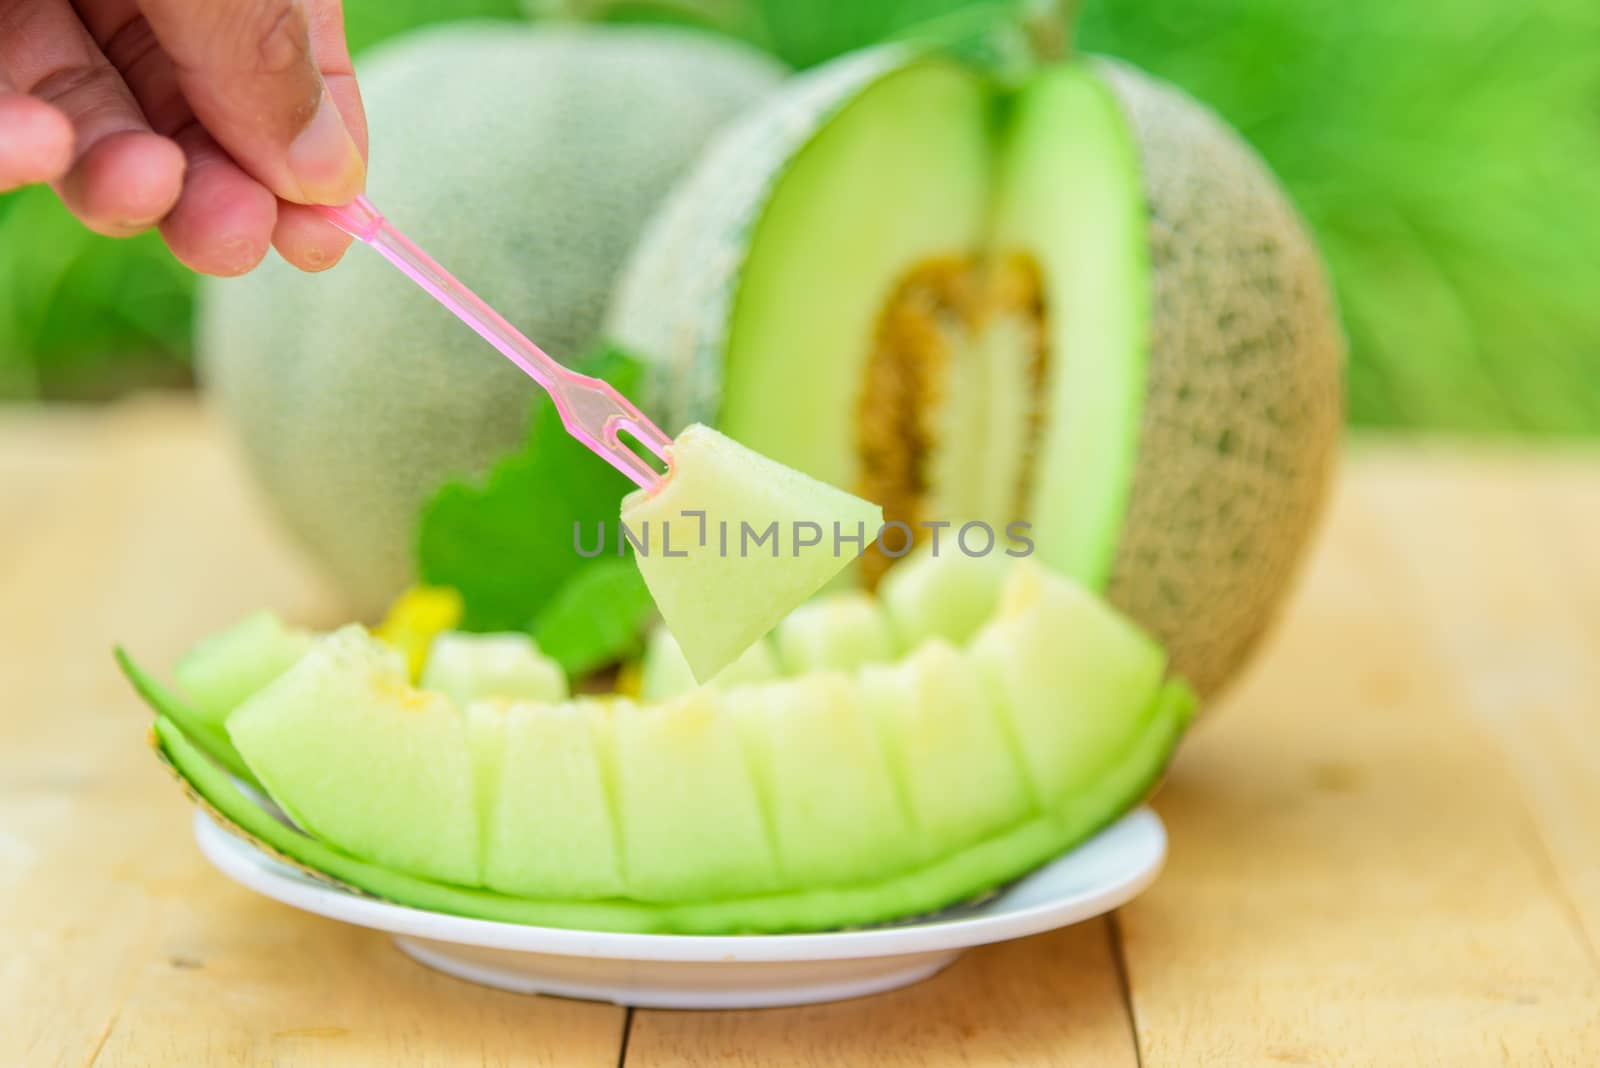 a piece of fresh green melon